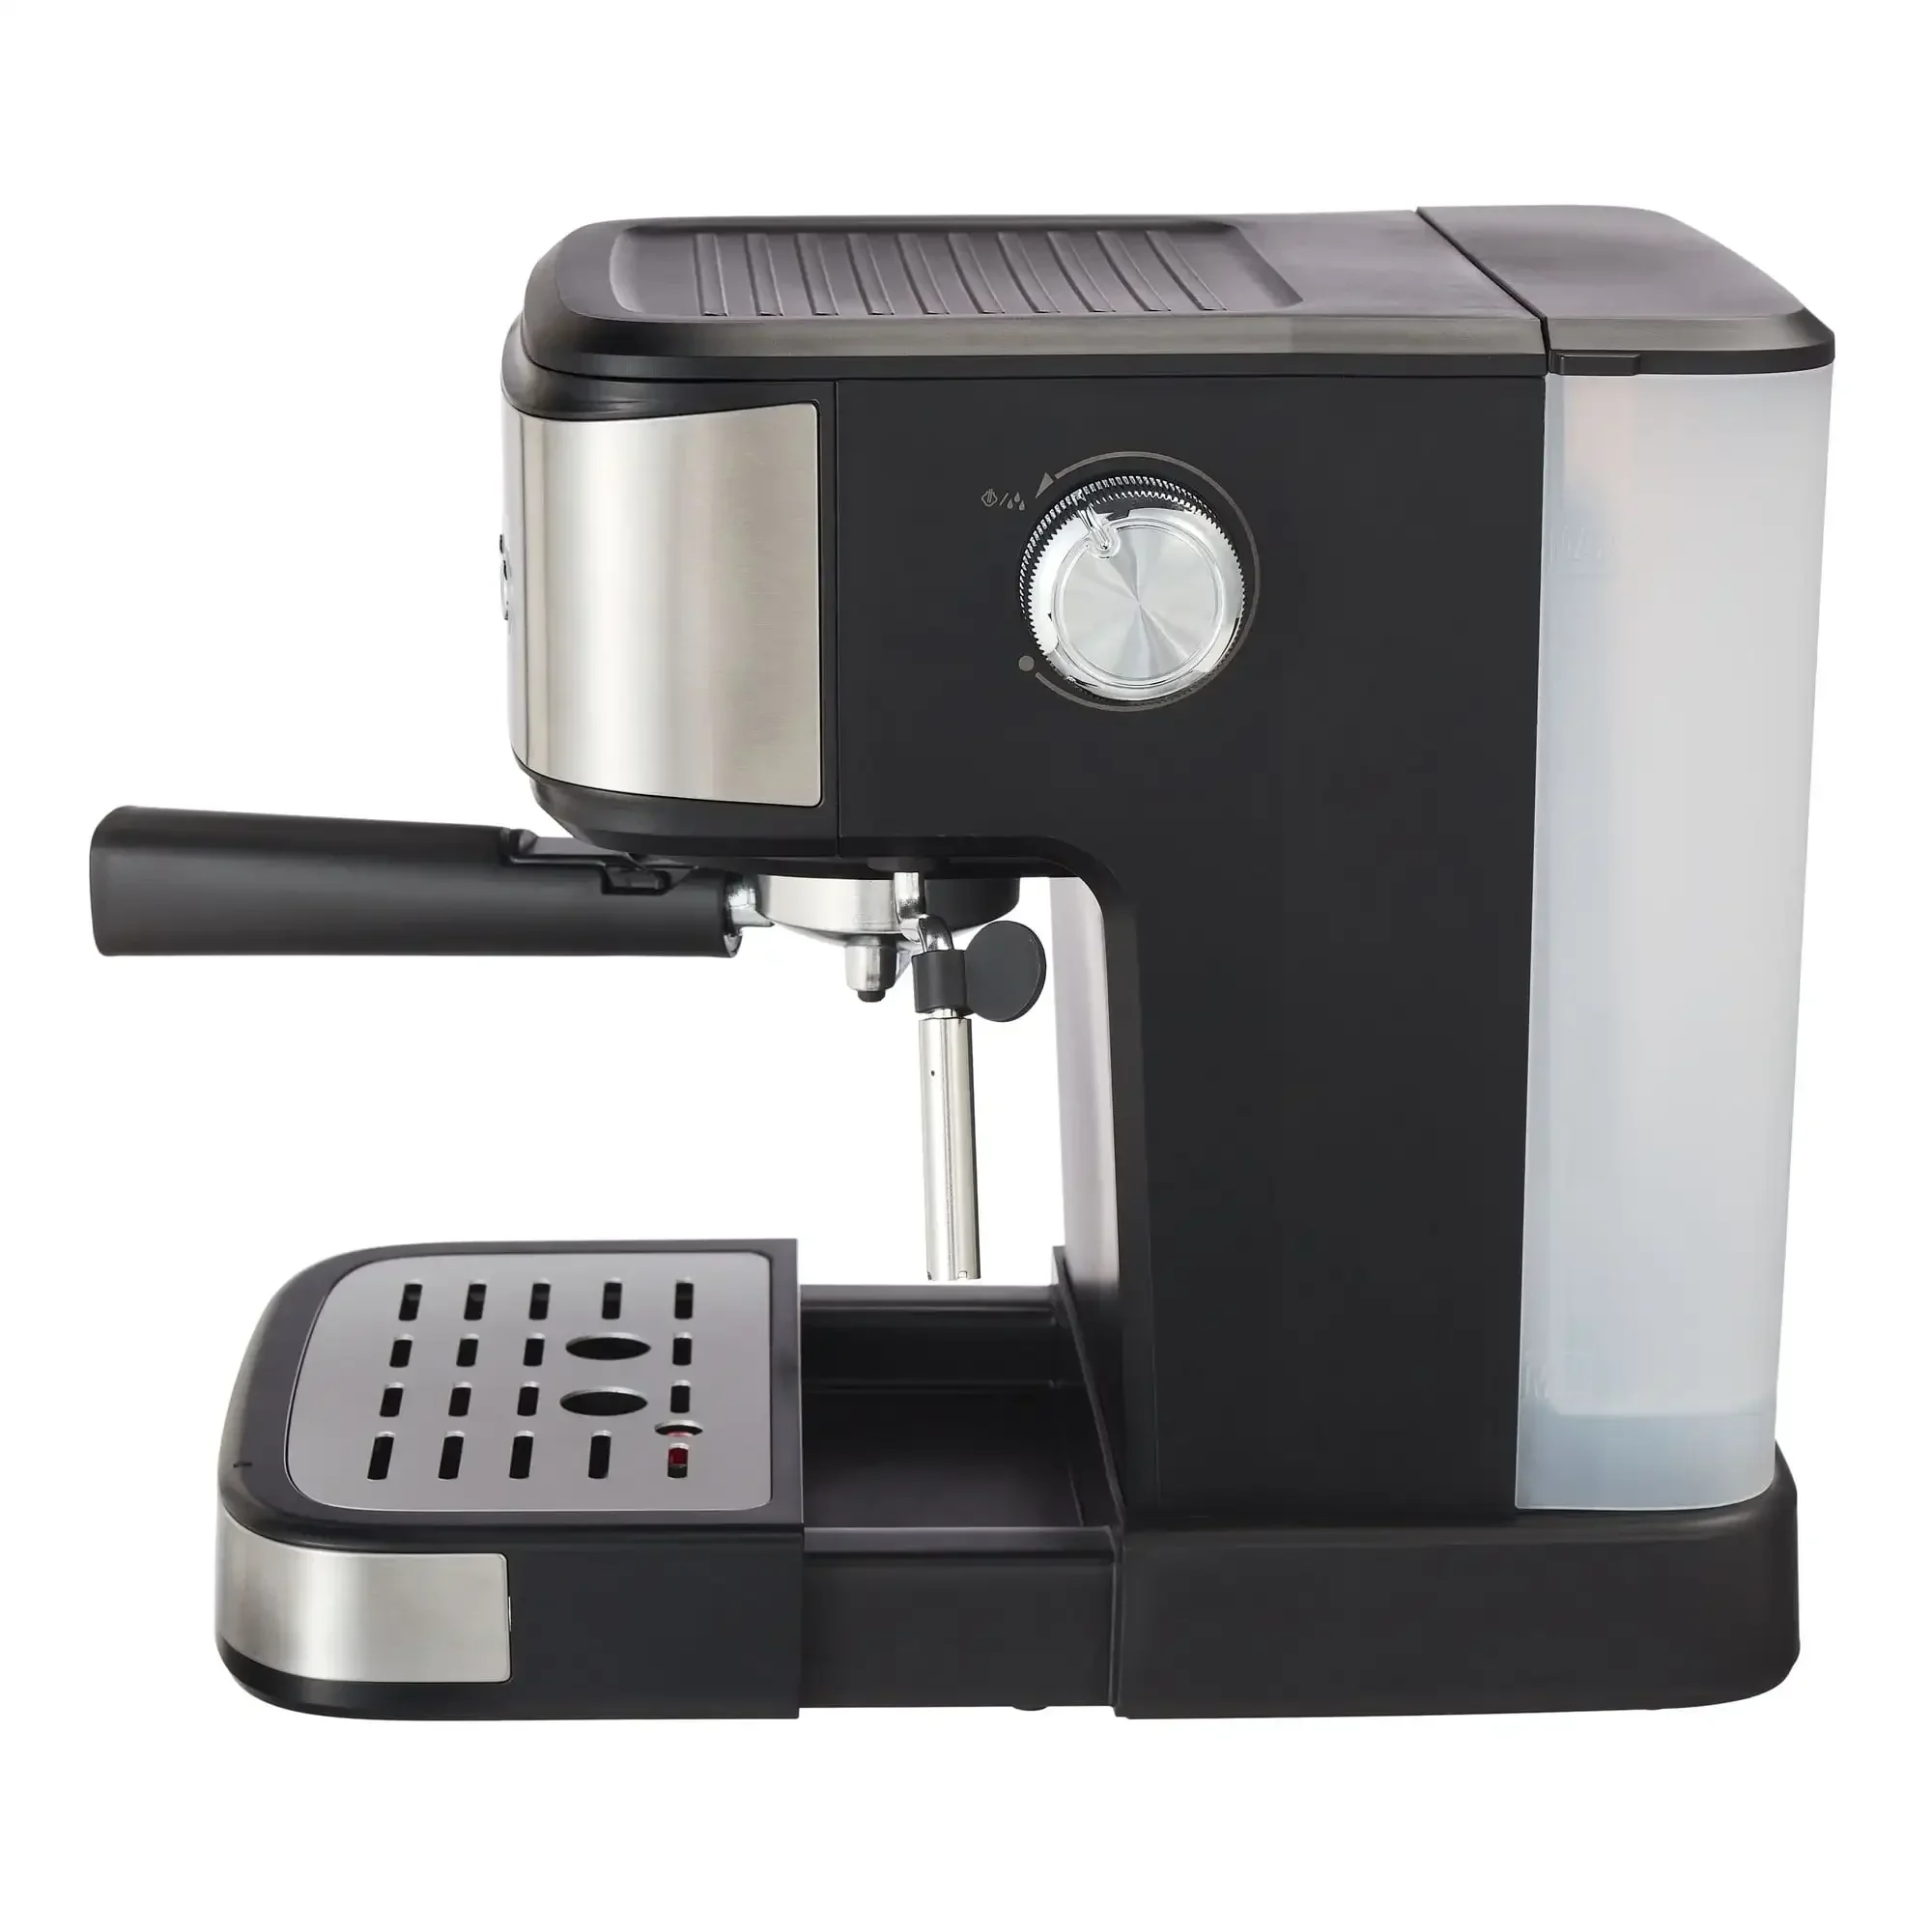 Farberware 1.5L 20 Bar Espresso Maker with Removable Water Tank, Silver and  Black - AliExpress